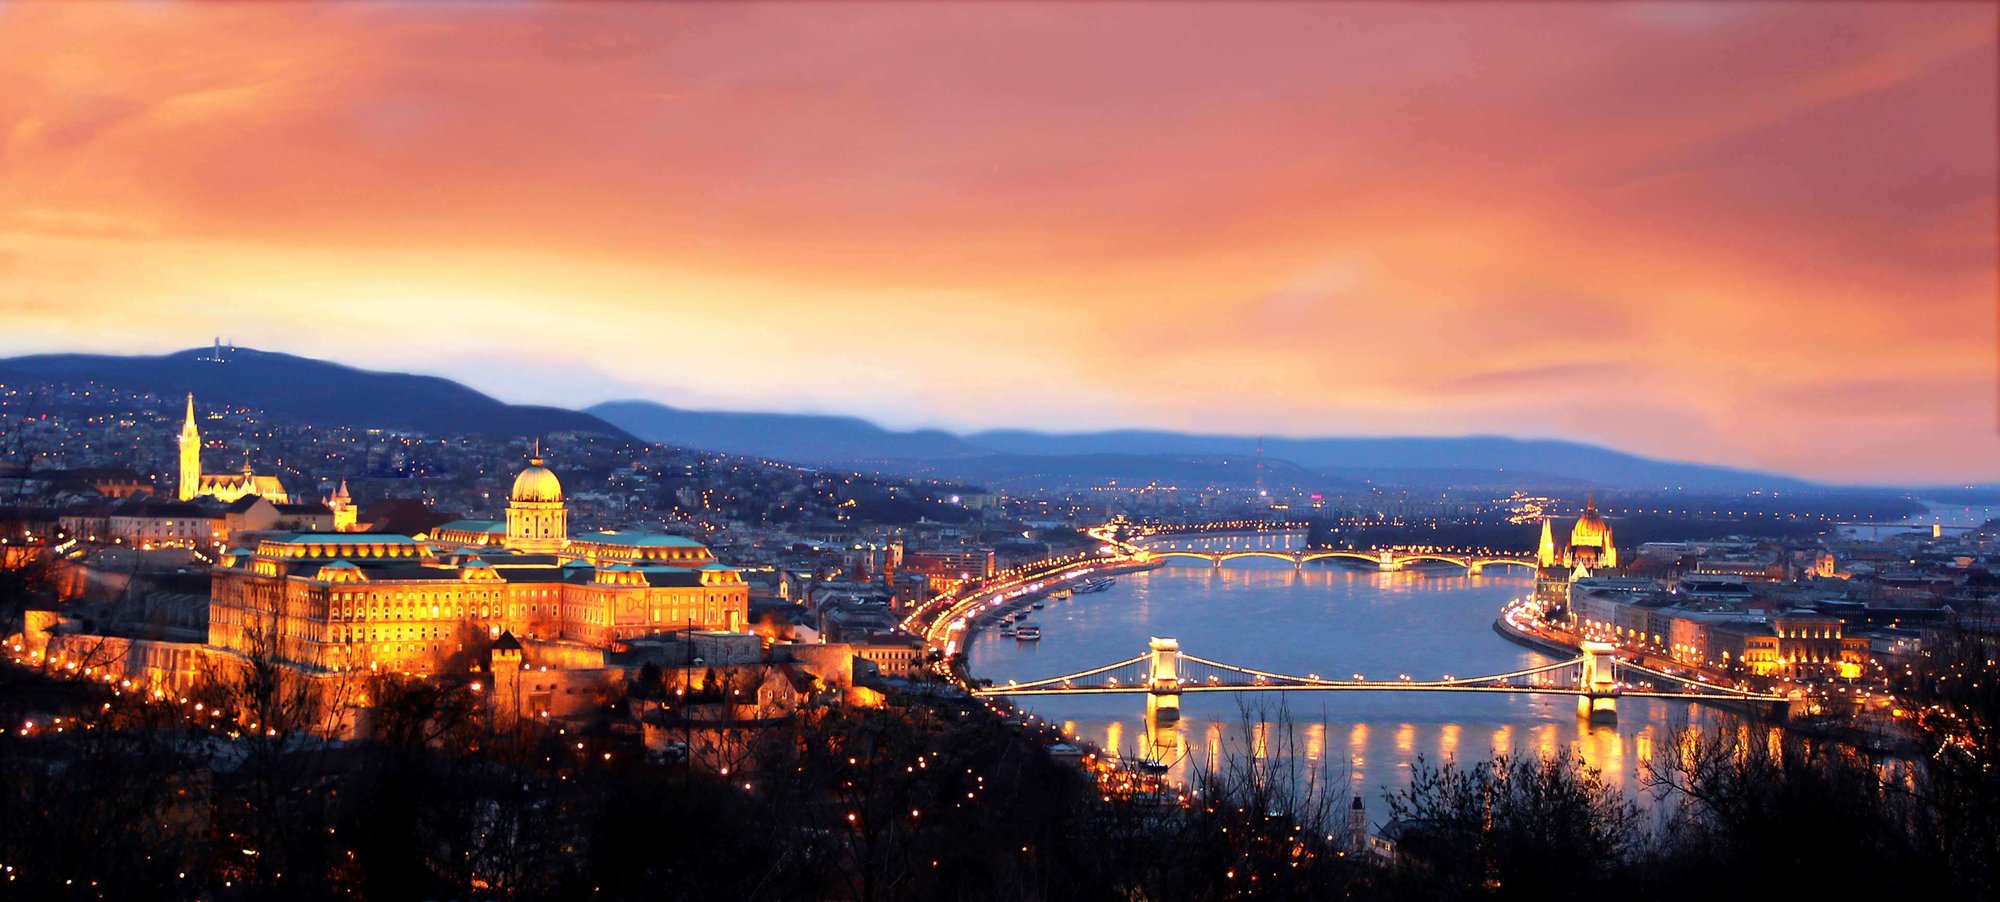 budapest city view